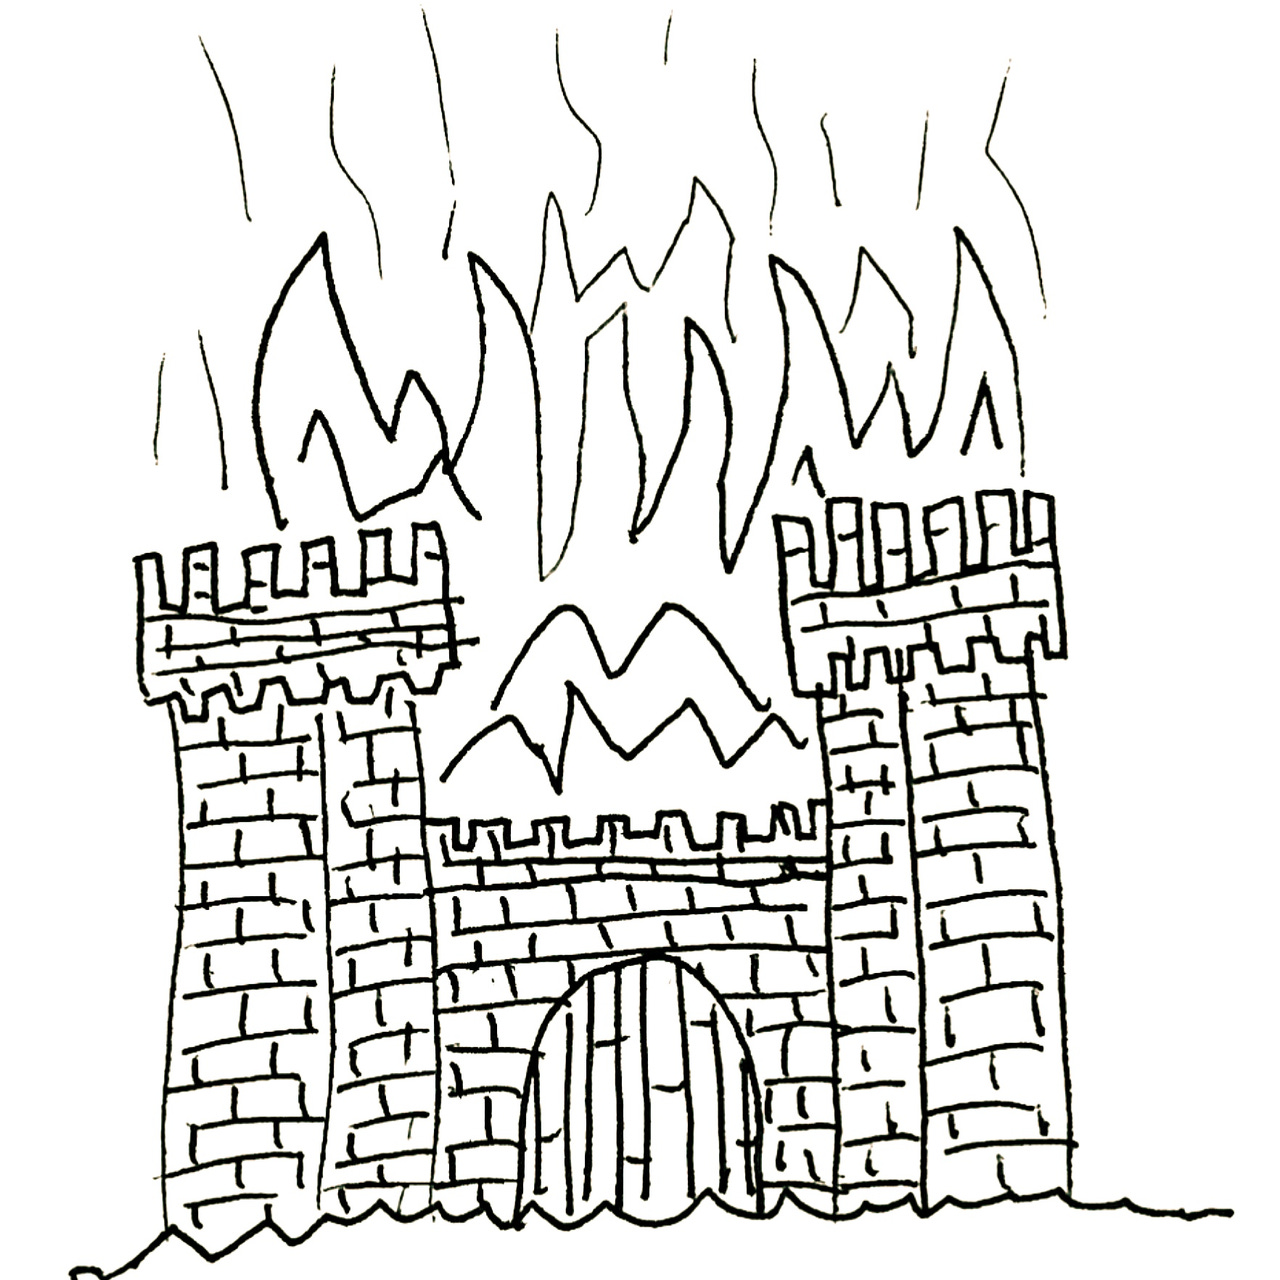 Artwork for Only Castles Burning